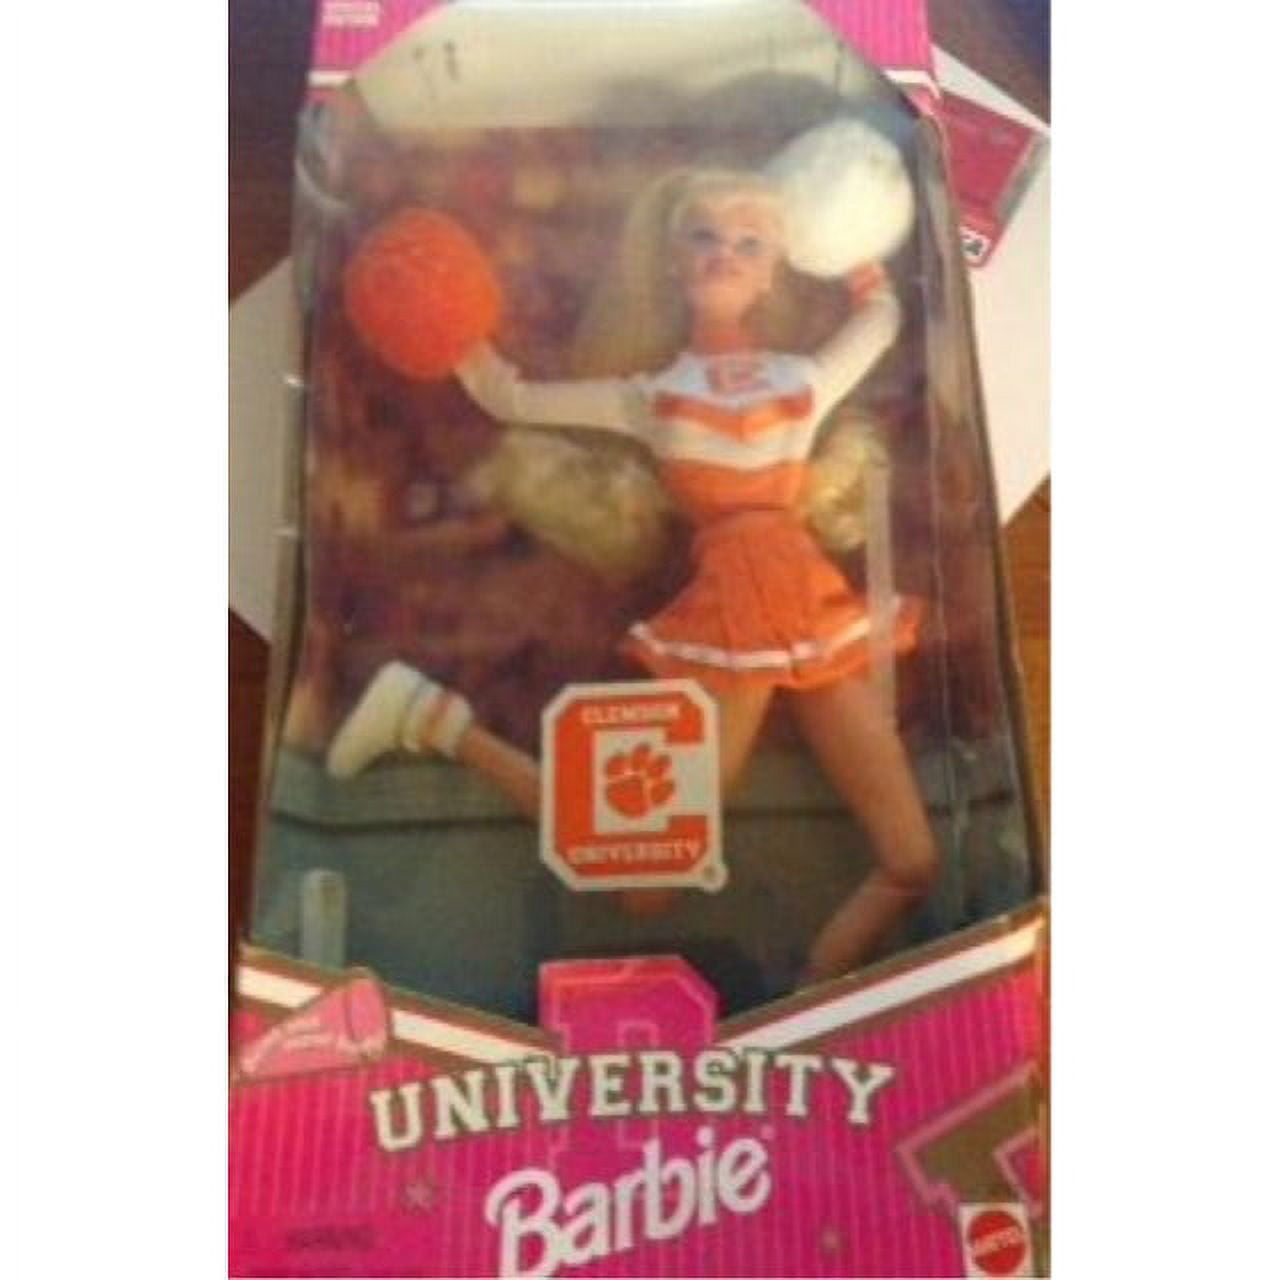 Barbie University Clemson Cheerleader Doll